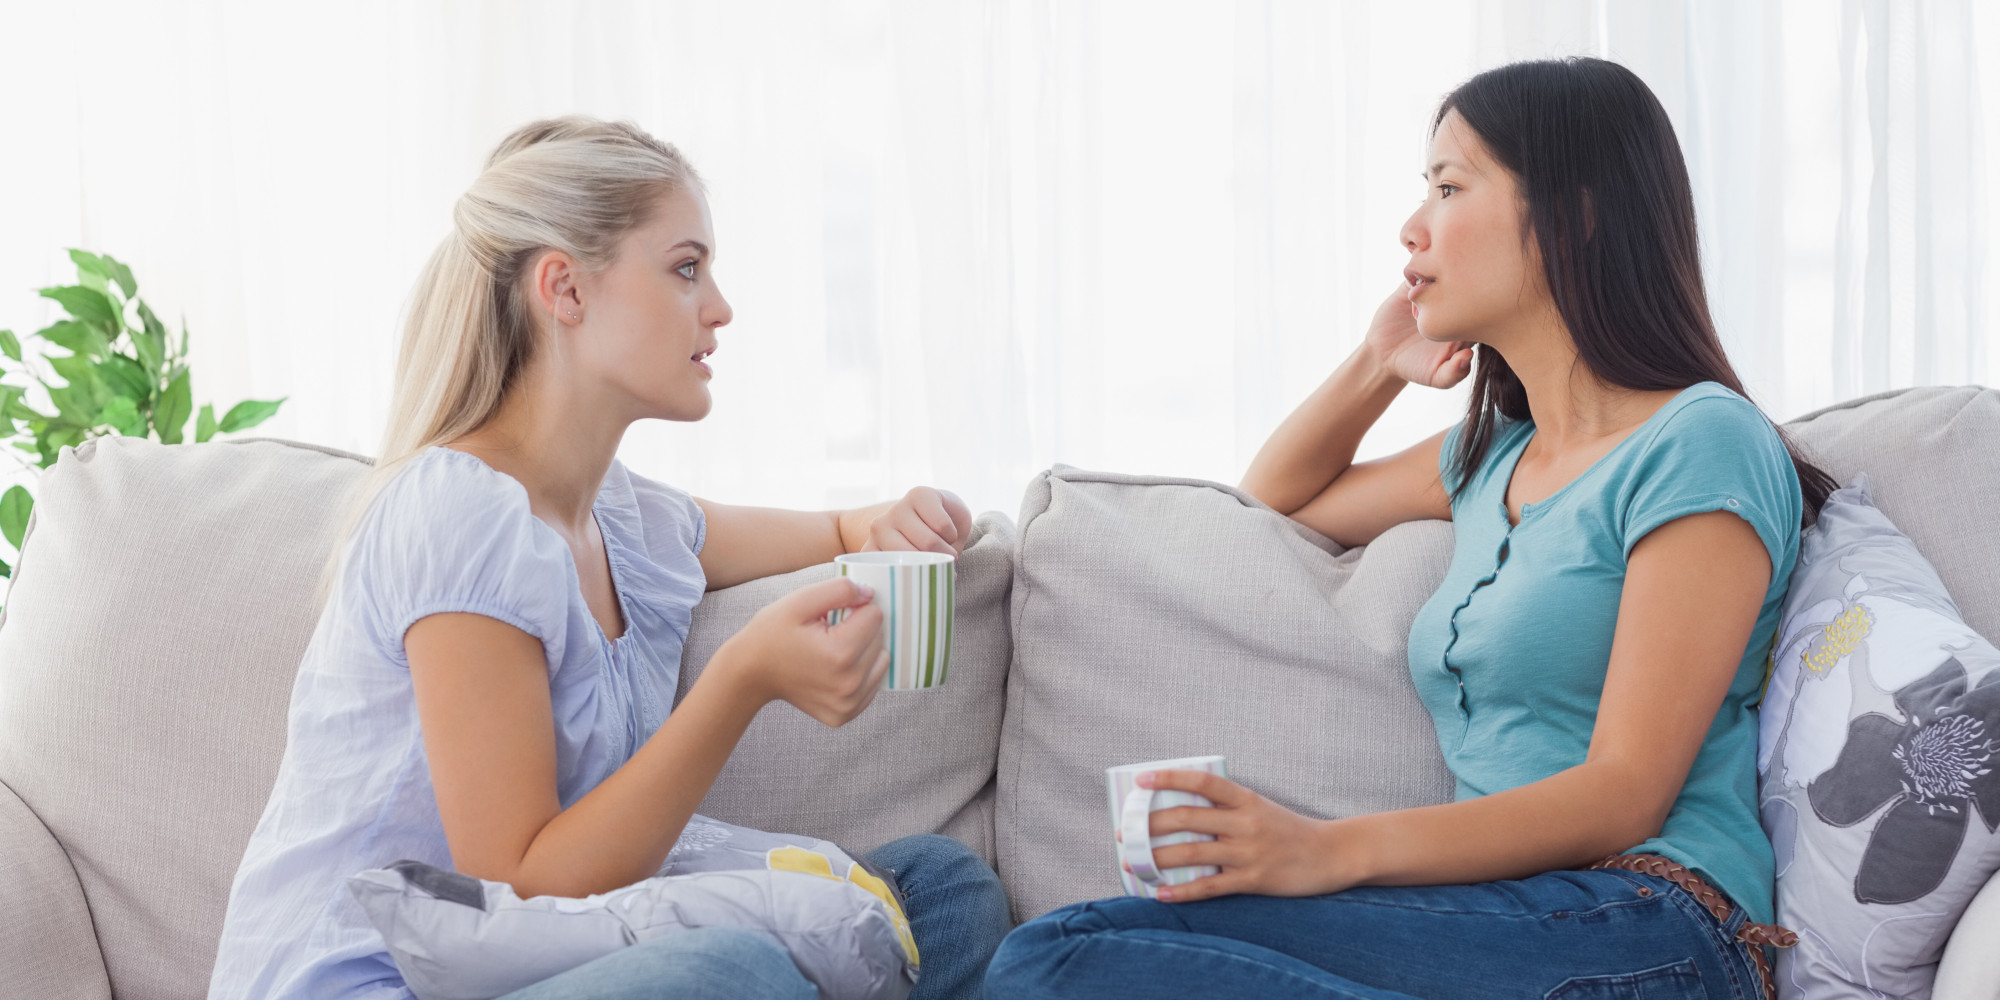 friend relationship help ways abusive talking woman